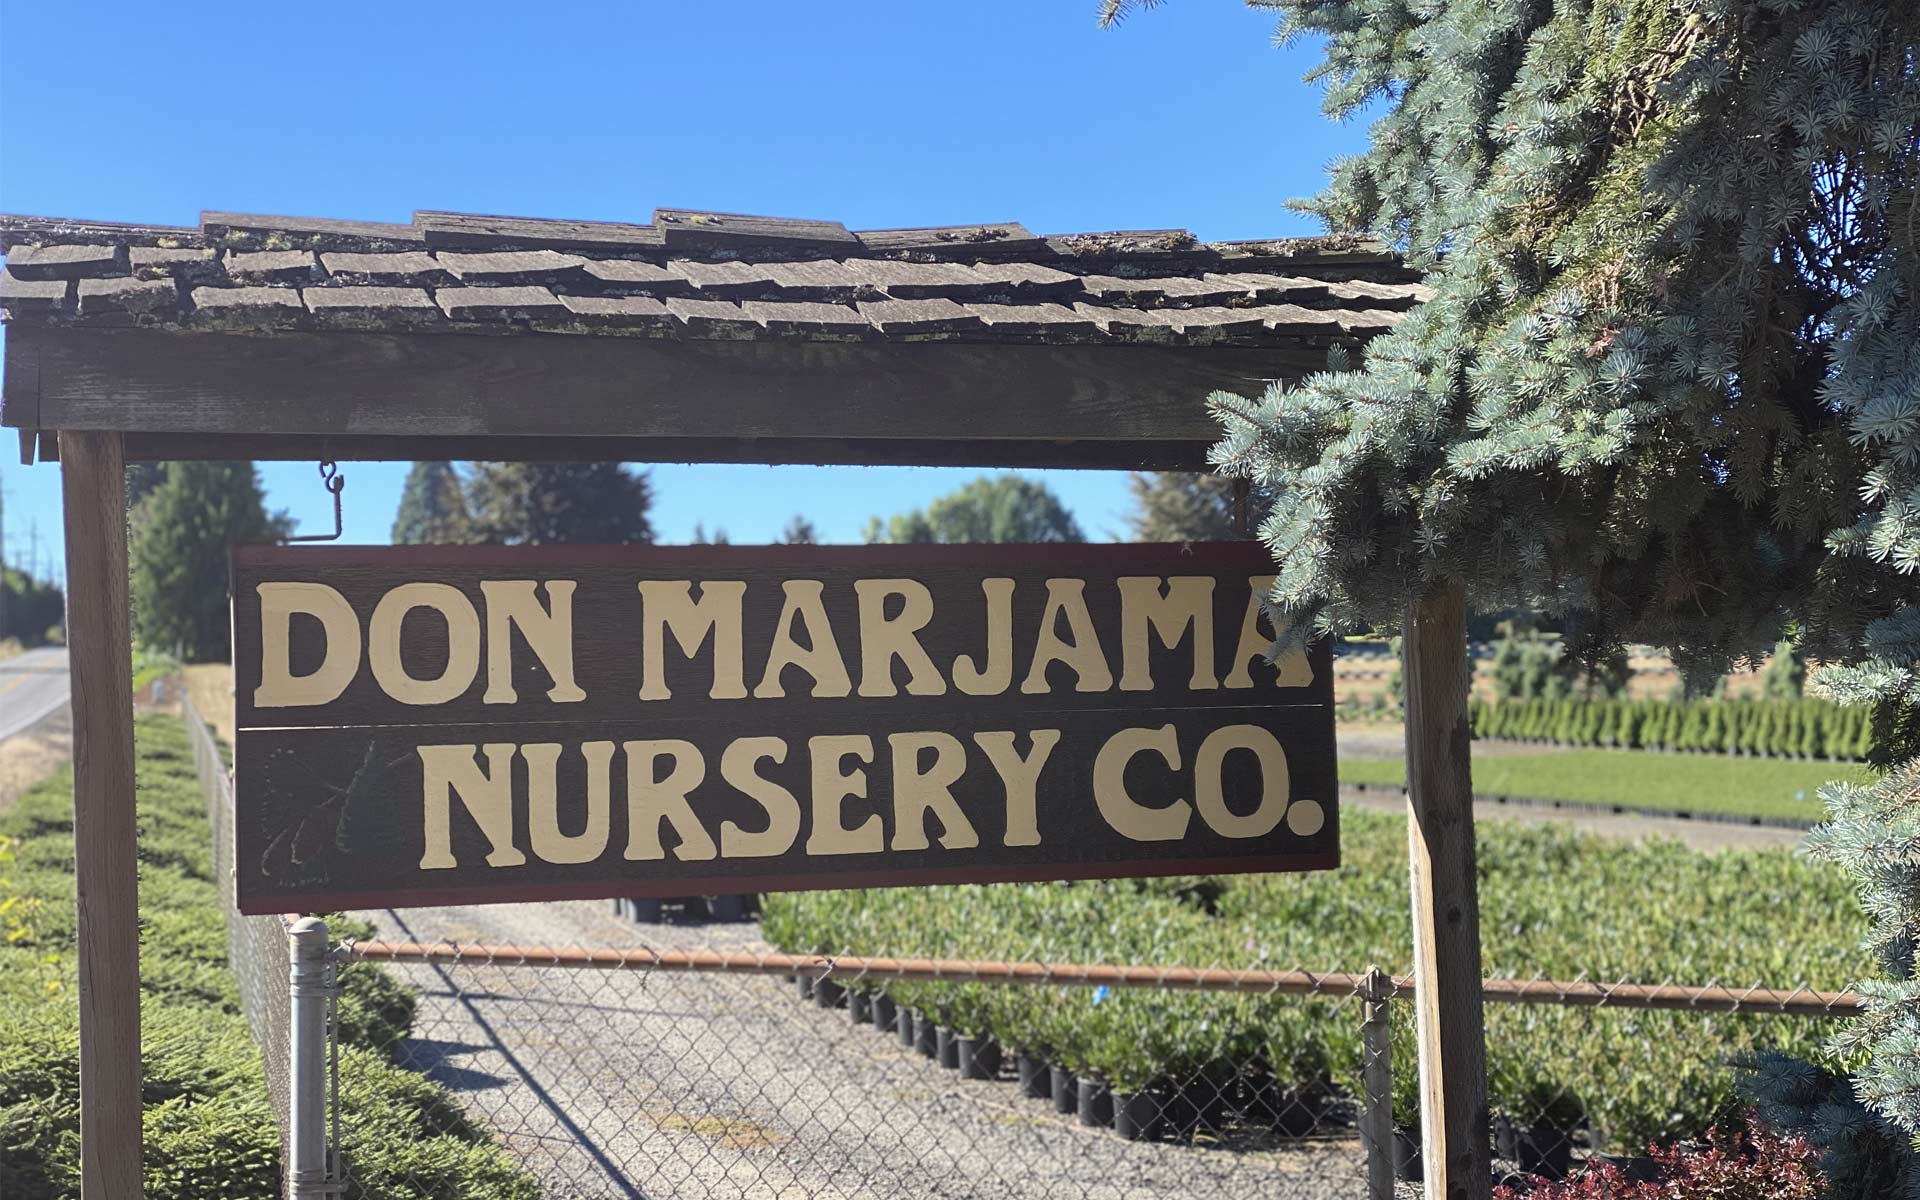 About Don Marjama Nursery